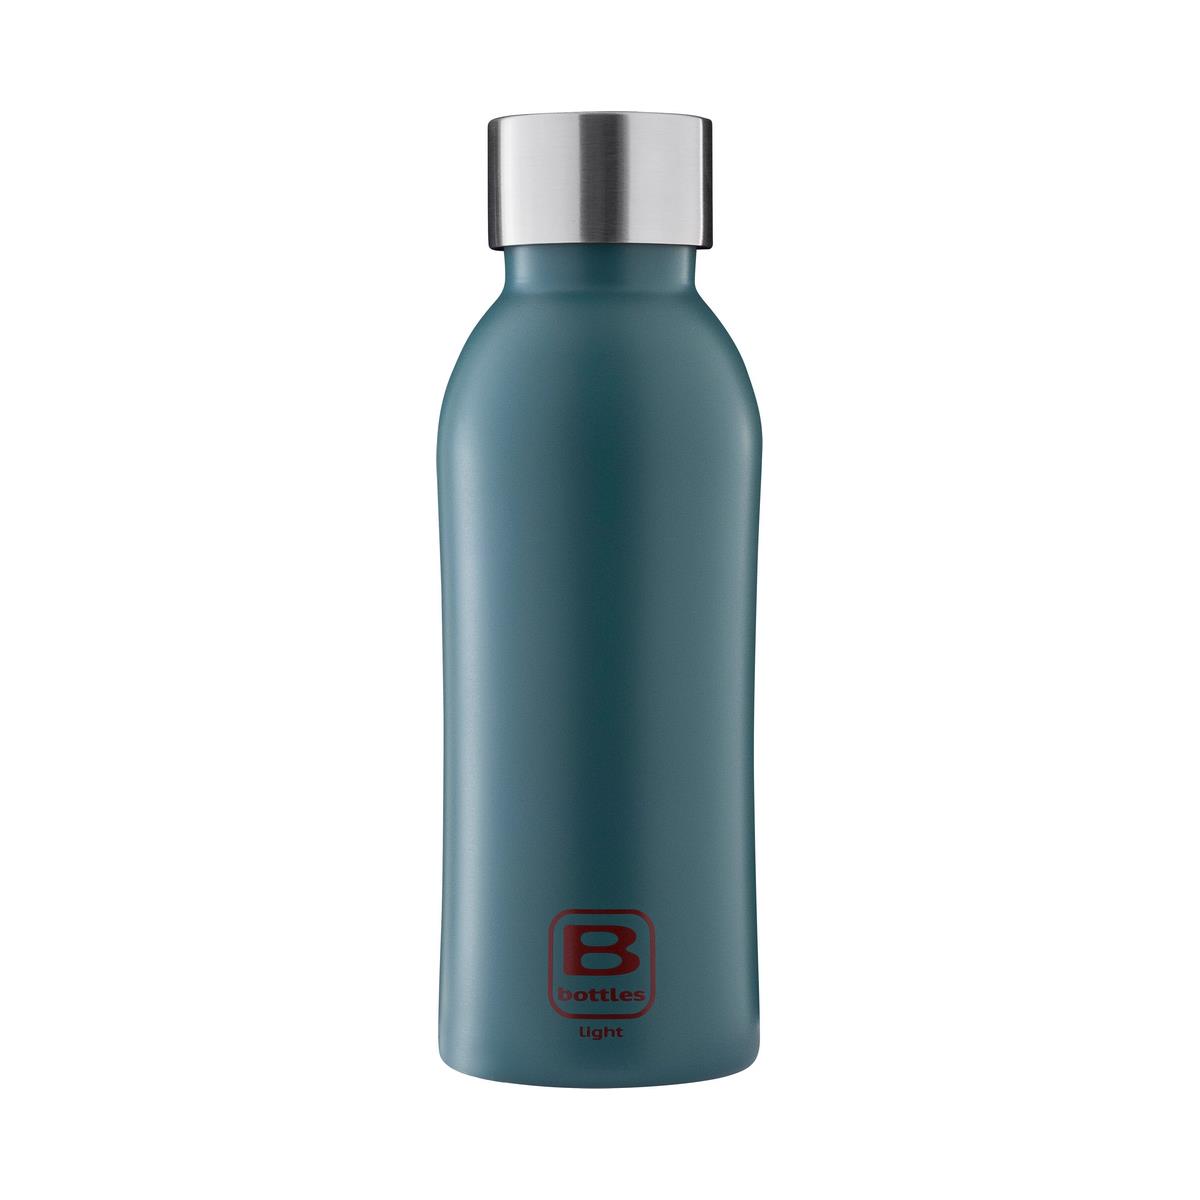 photo B Bottles Light - Teal Blue - 530 ml - Bottiglia in acciaio inox 18/10 ultra leggera e compatta